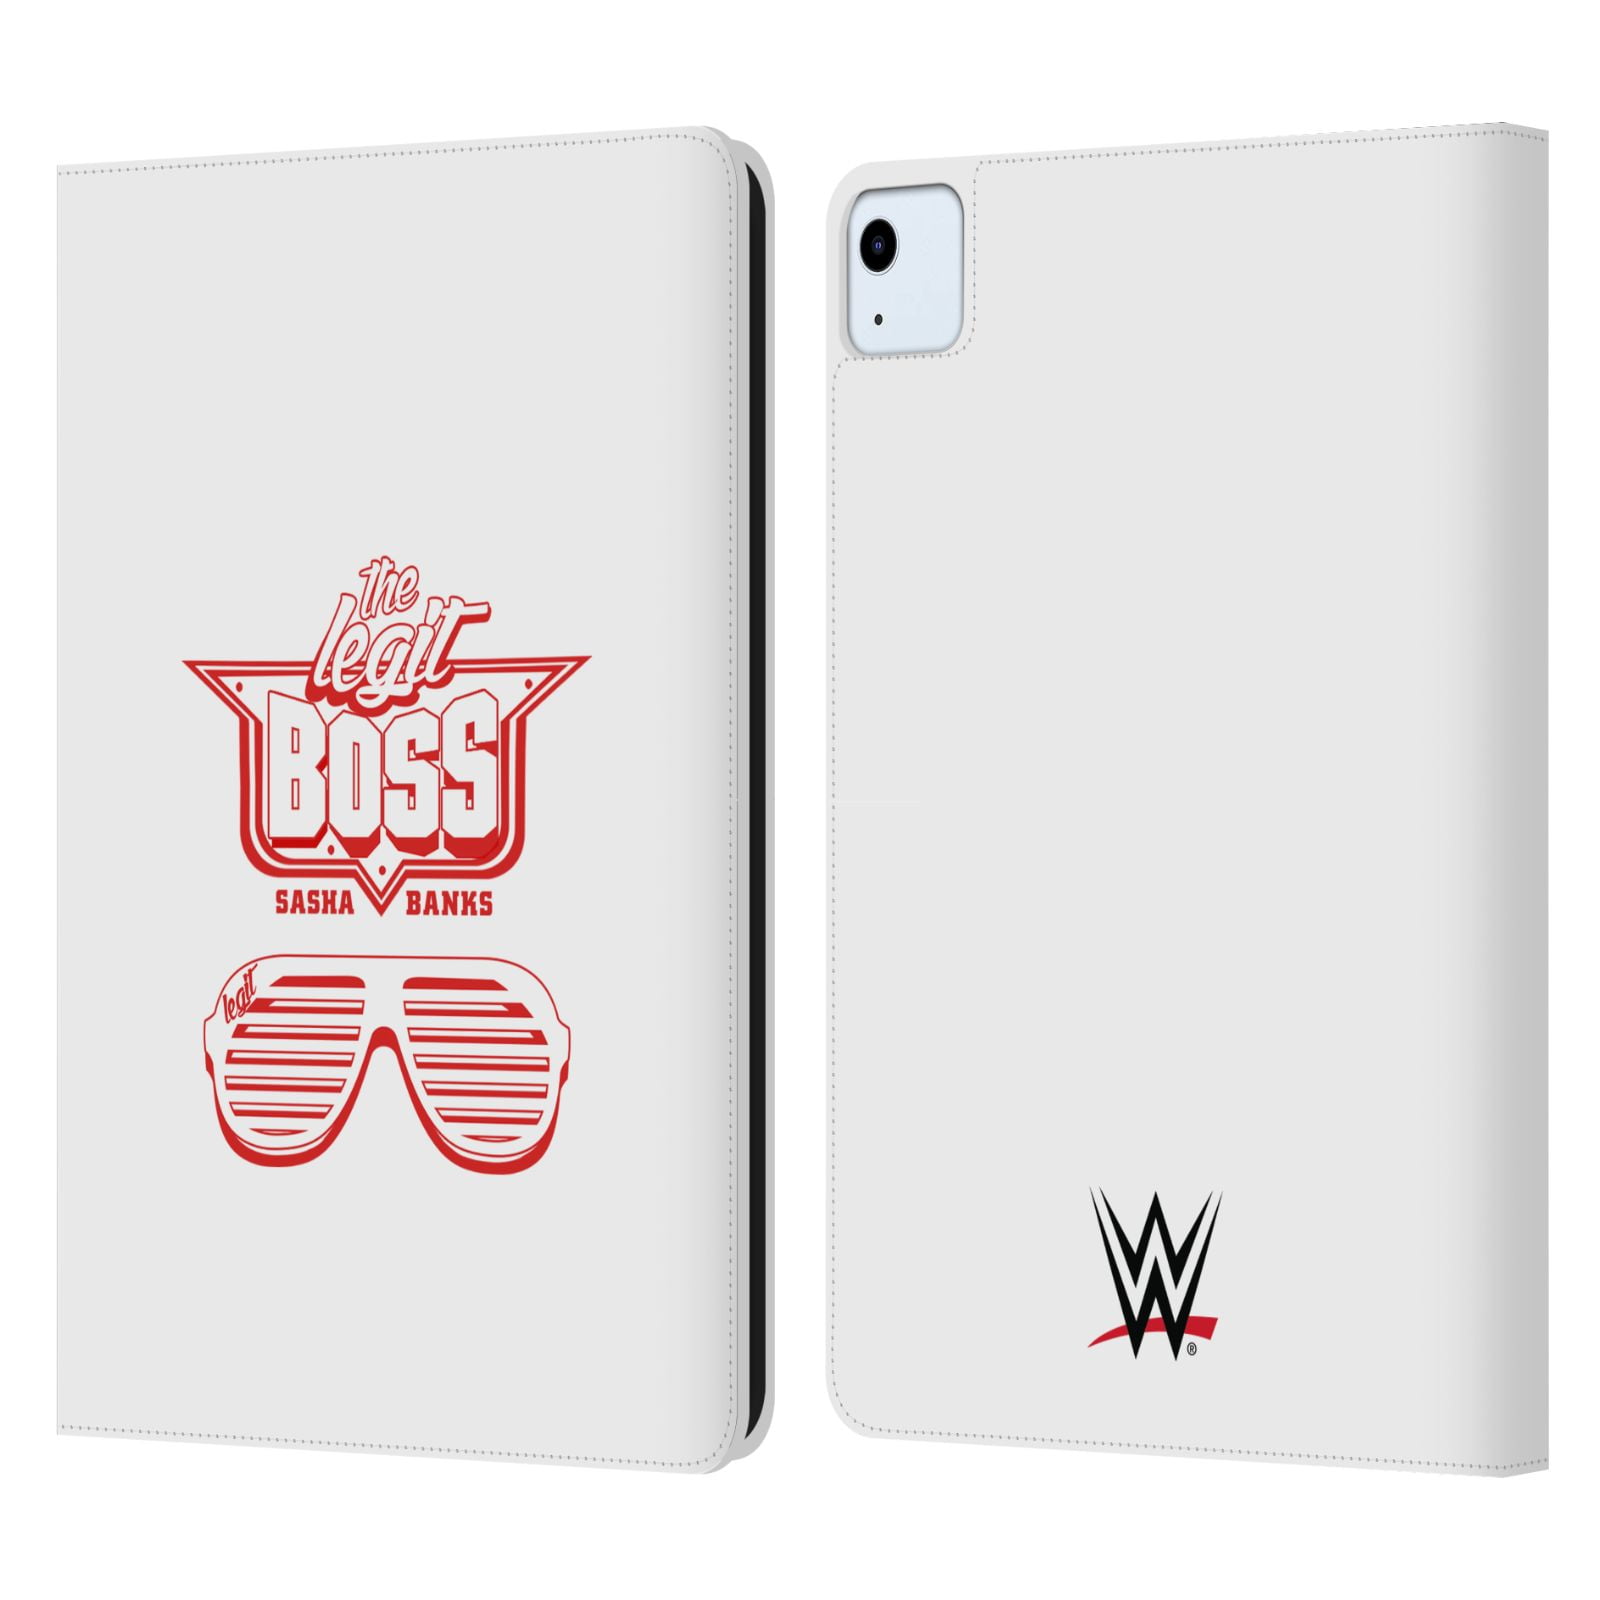 Mini 2 Mini 3 Official WWE John Cena Wrestlemania 34 Superstars Leather Book Wallet Case Cover for iPad Mini 1 